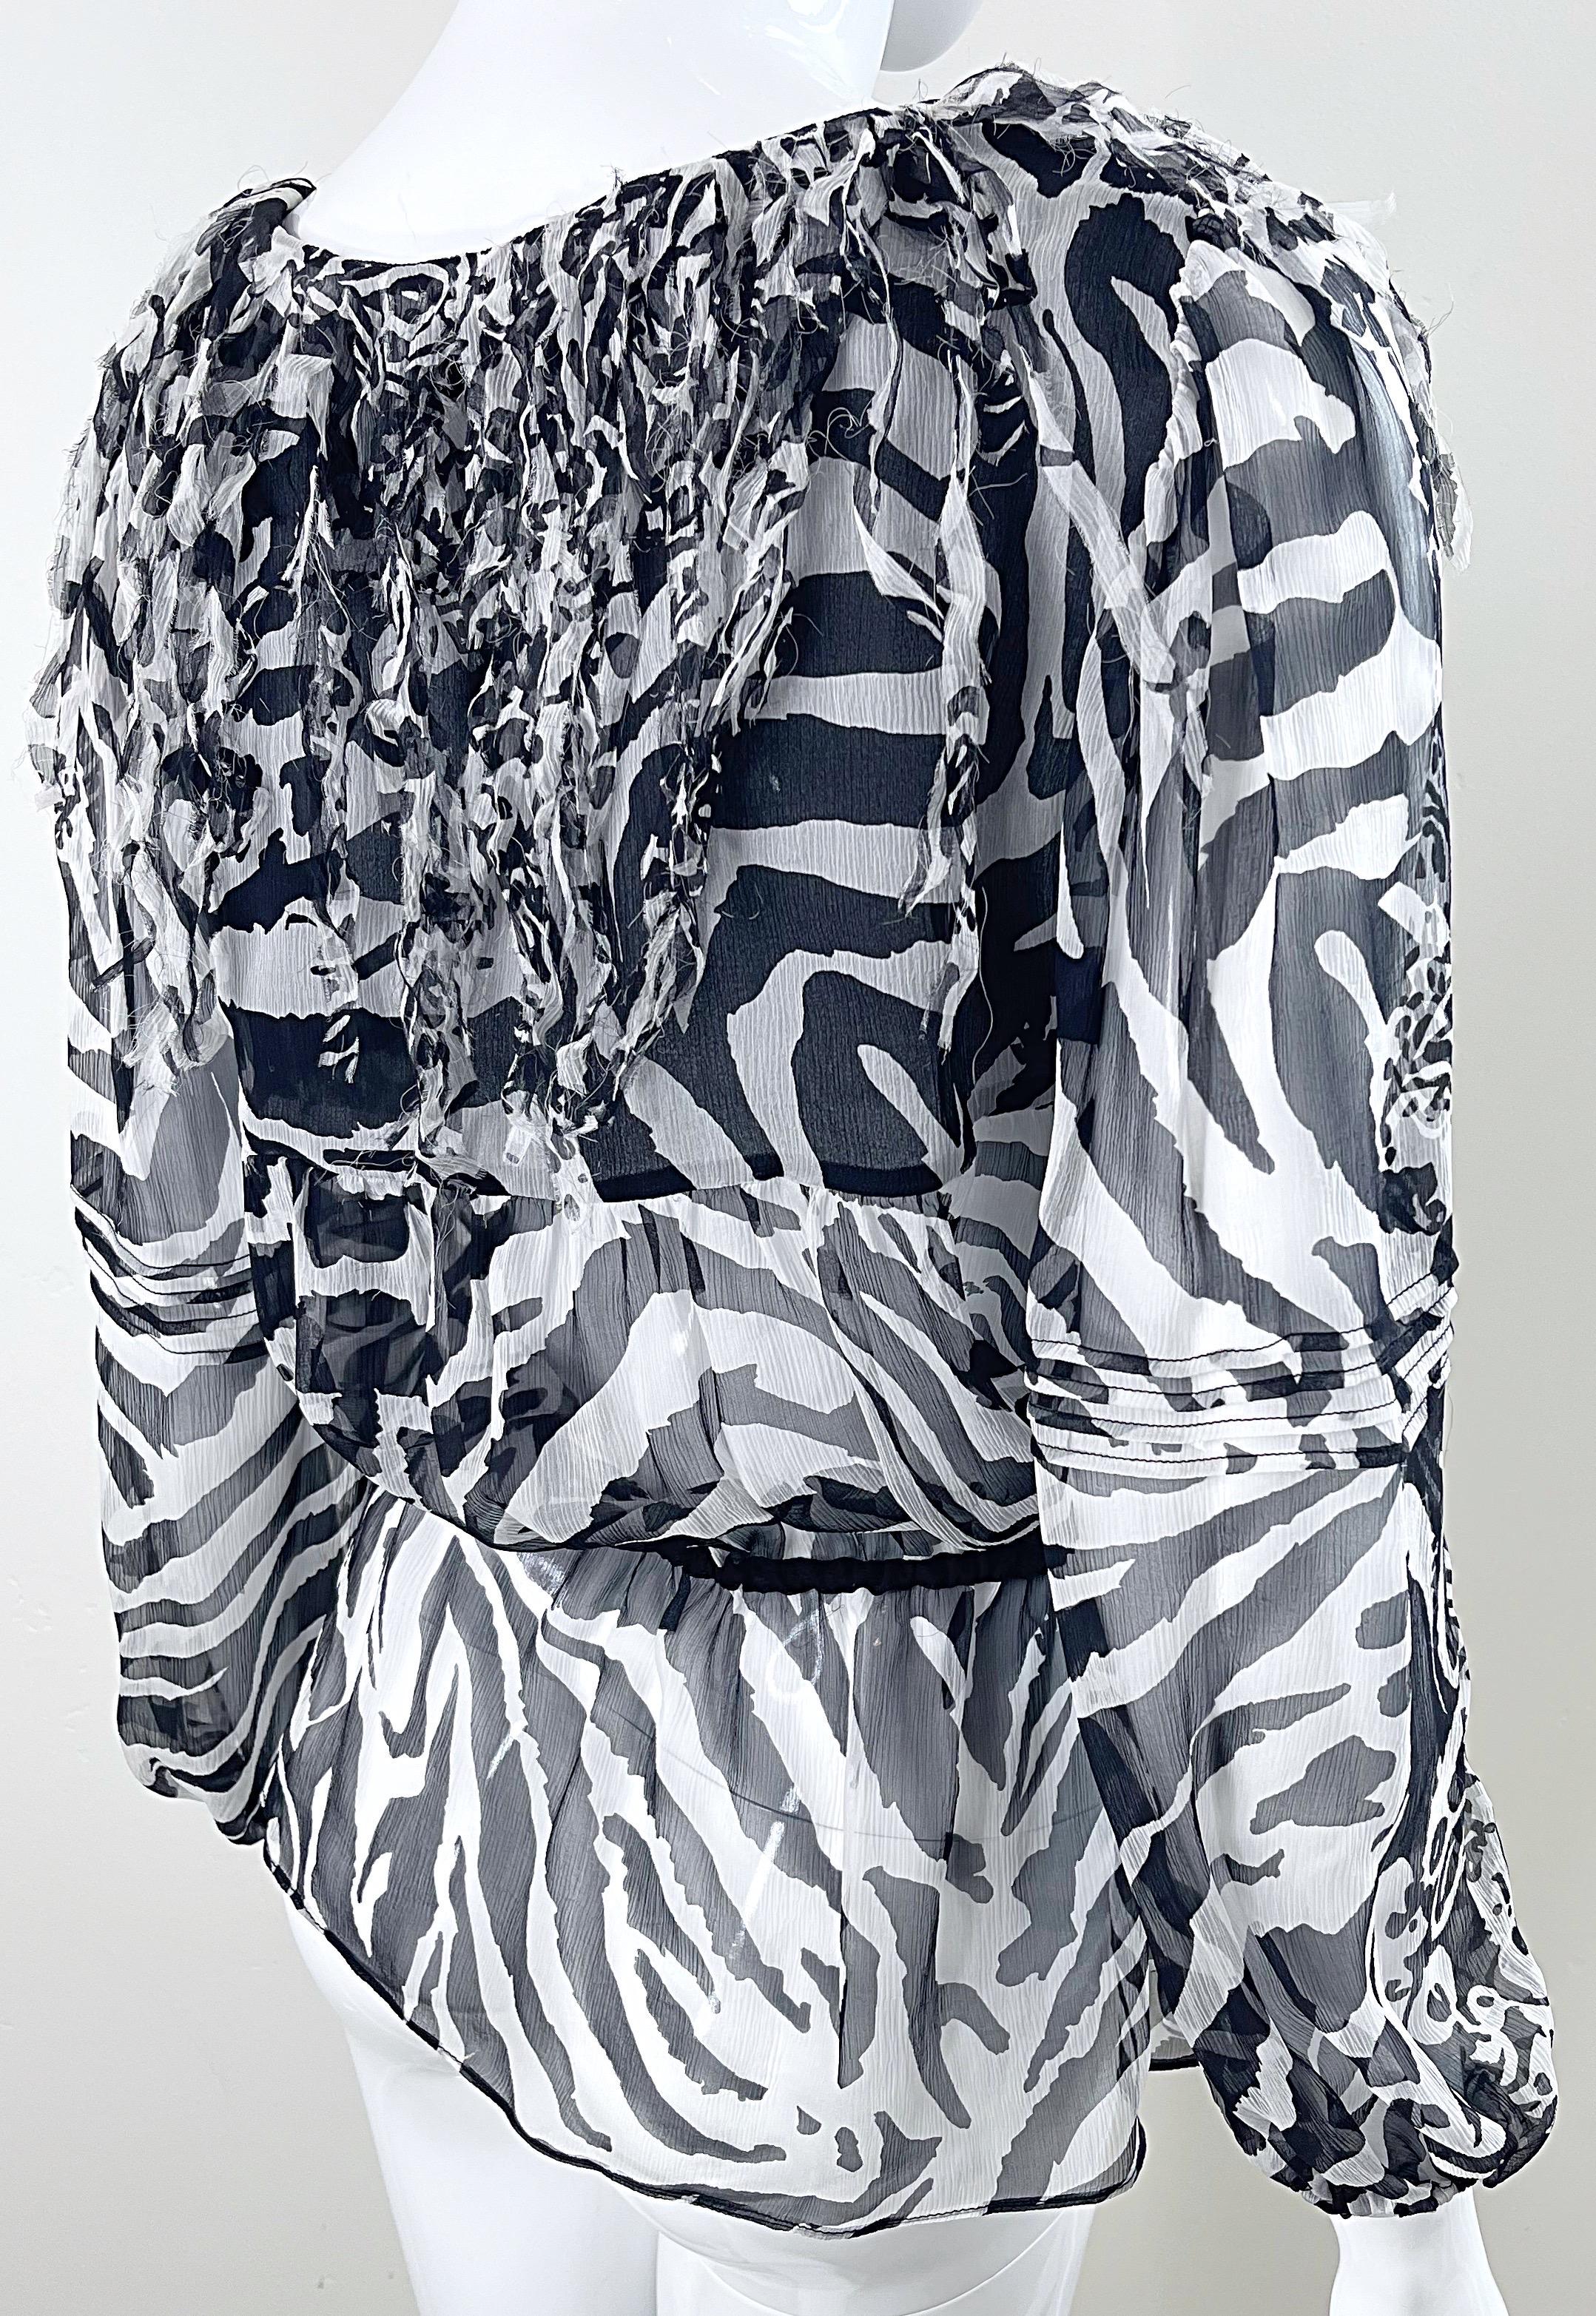 Blumarine Fall 2010 Zebra Print Black and White Fringe Silk Chiffon Blouse Top For Sale 4